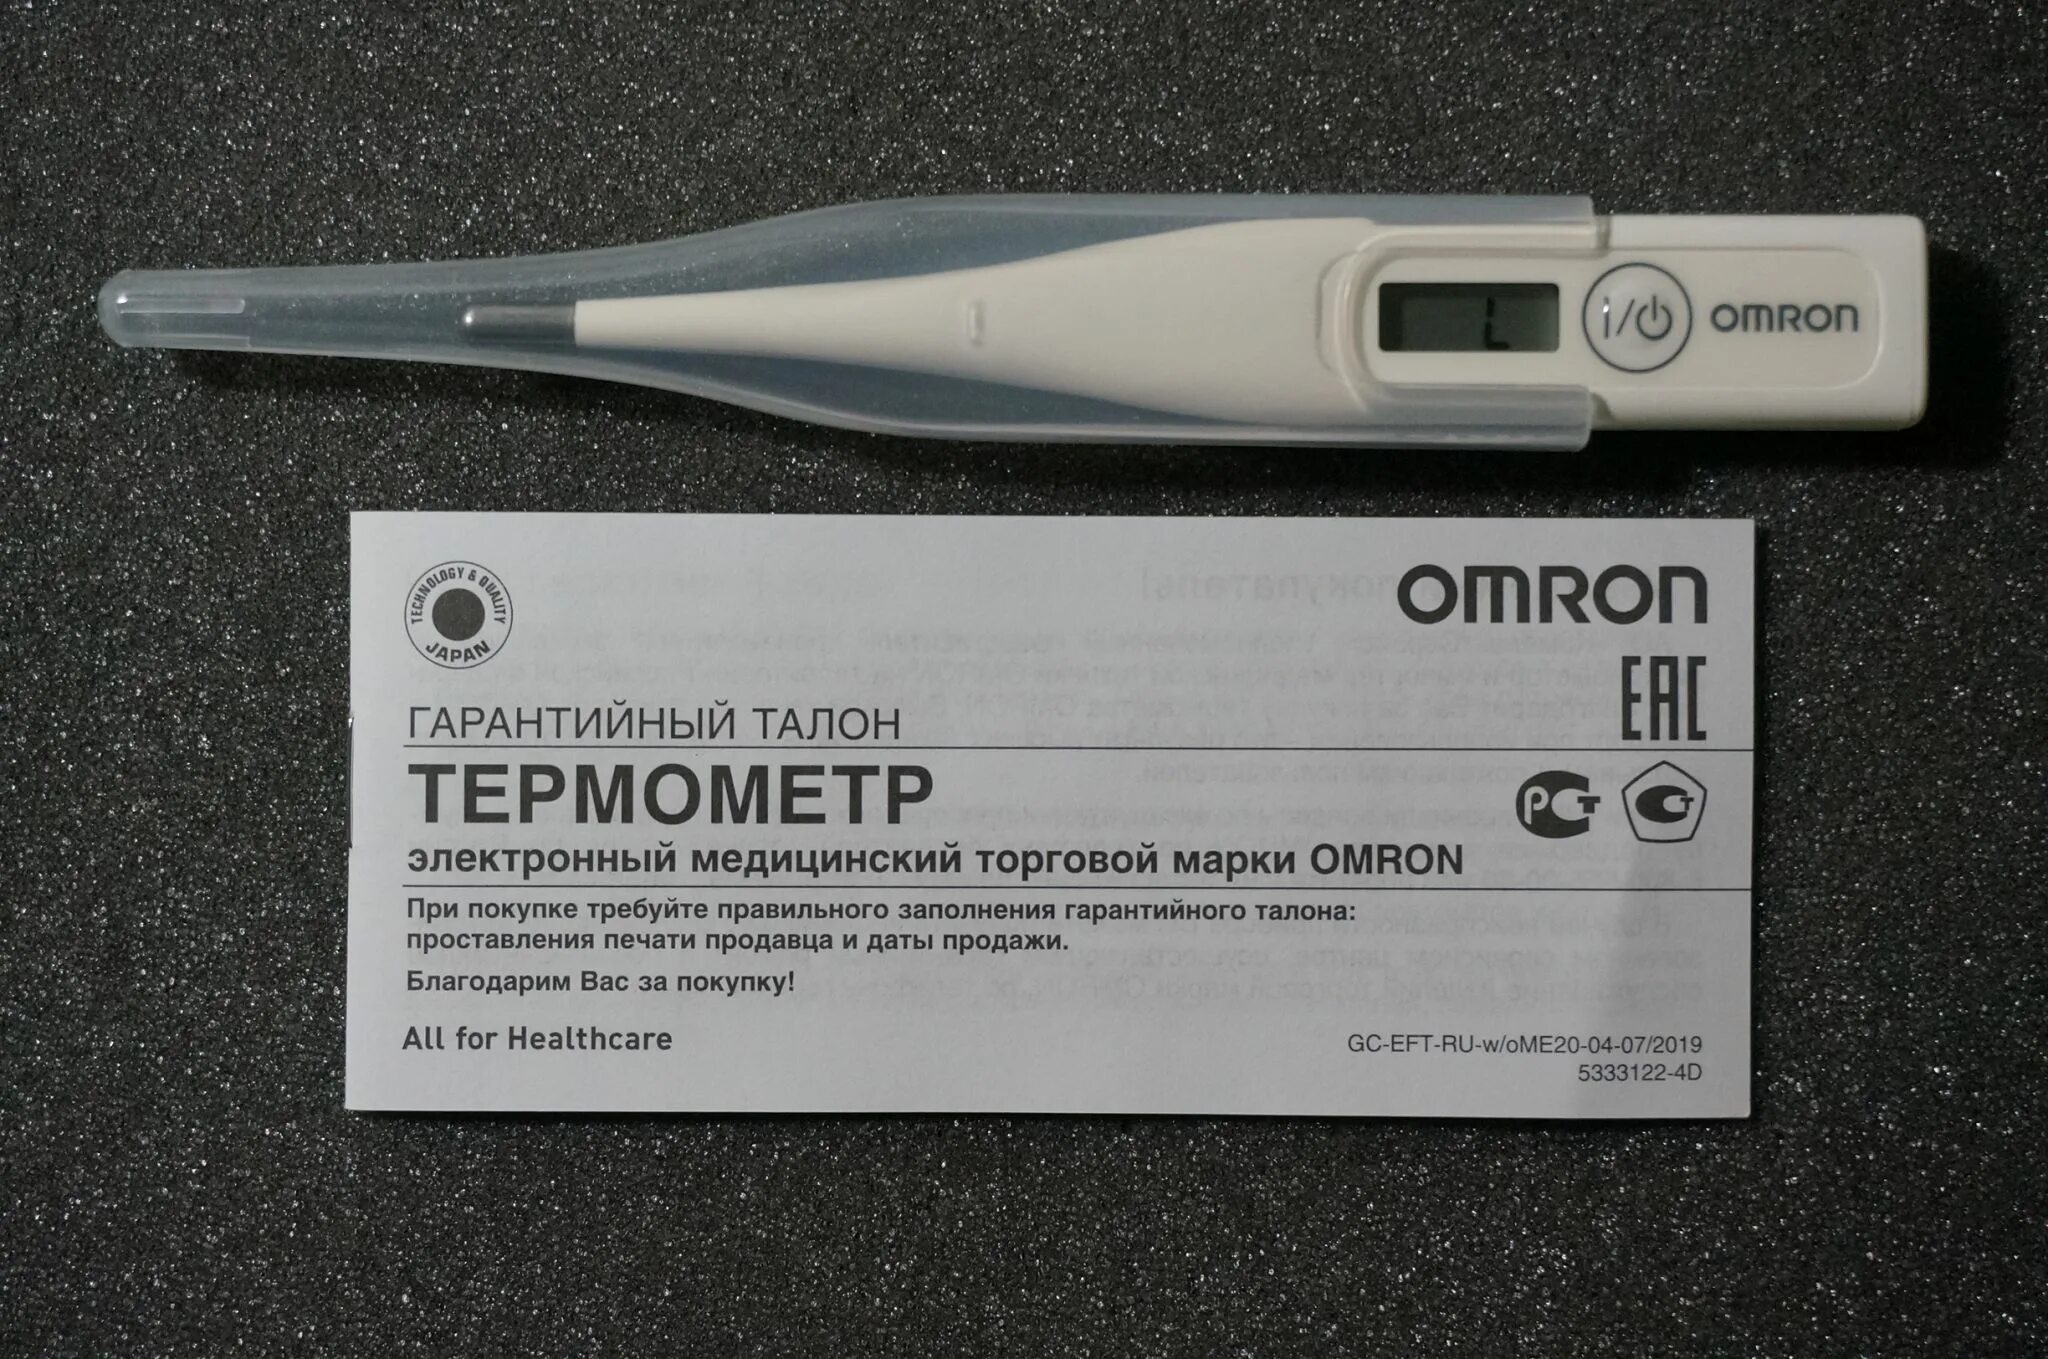 Сигналы электронного градусника. Термометр электронный Omron Eco Temp Basic (MC-246-ru). Термометр Eco Temp MC-246. Термометр медицинский Omron Eco Temp Basic. Омрон термометр MC-246 эко темп Бейсик.